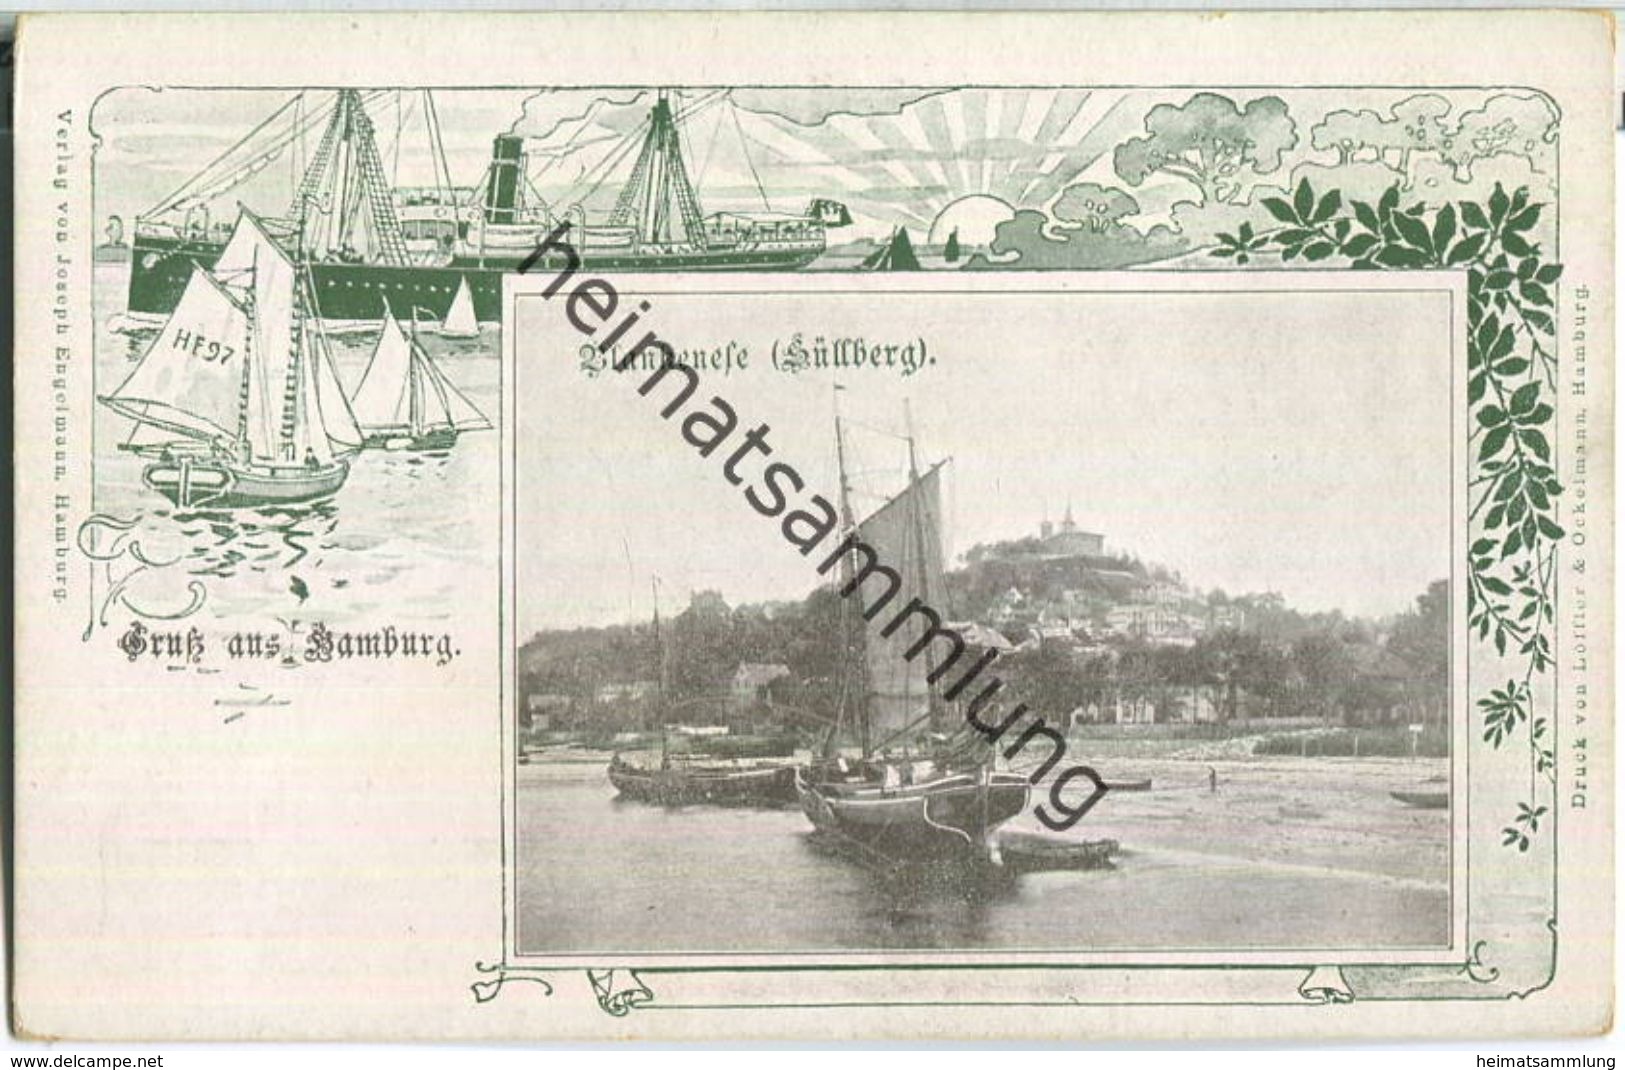 Hamburg-Blankenese - Süllberg - Verlag Joseph Engelmann Hamburg - Blankenese